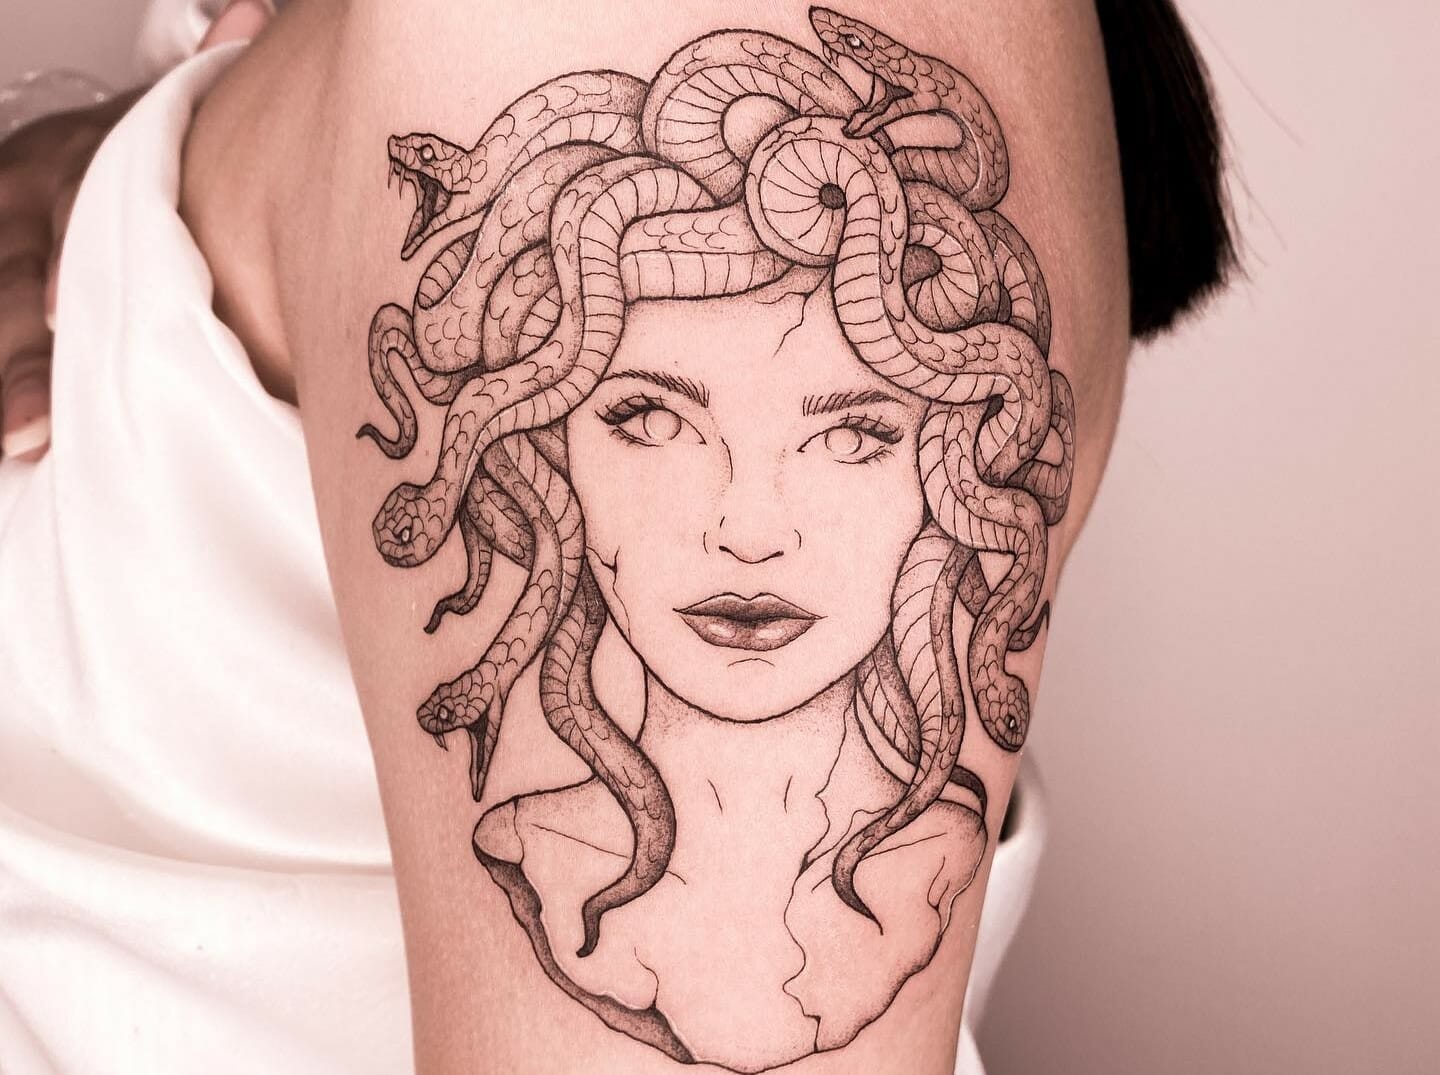 Illustrative style Medusa tattoo on the right upper arm